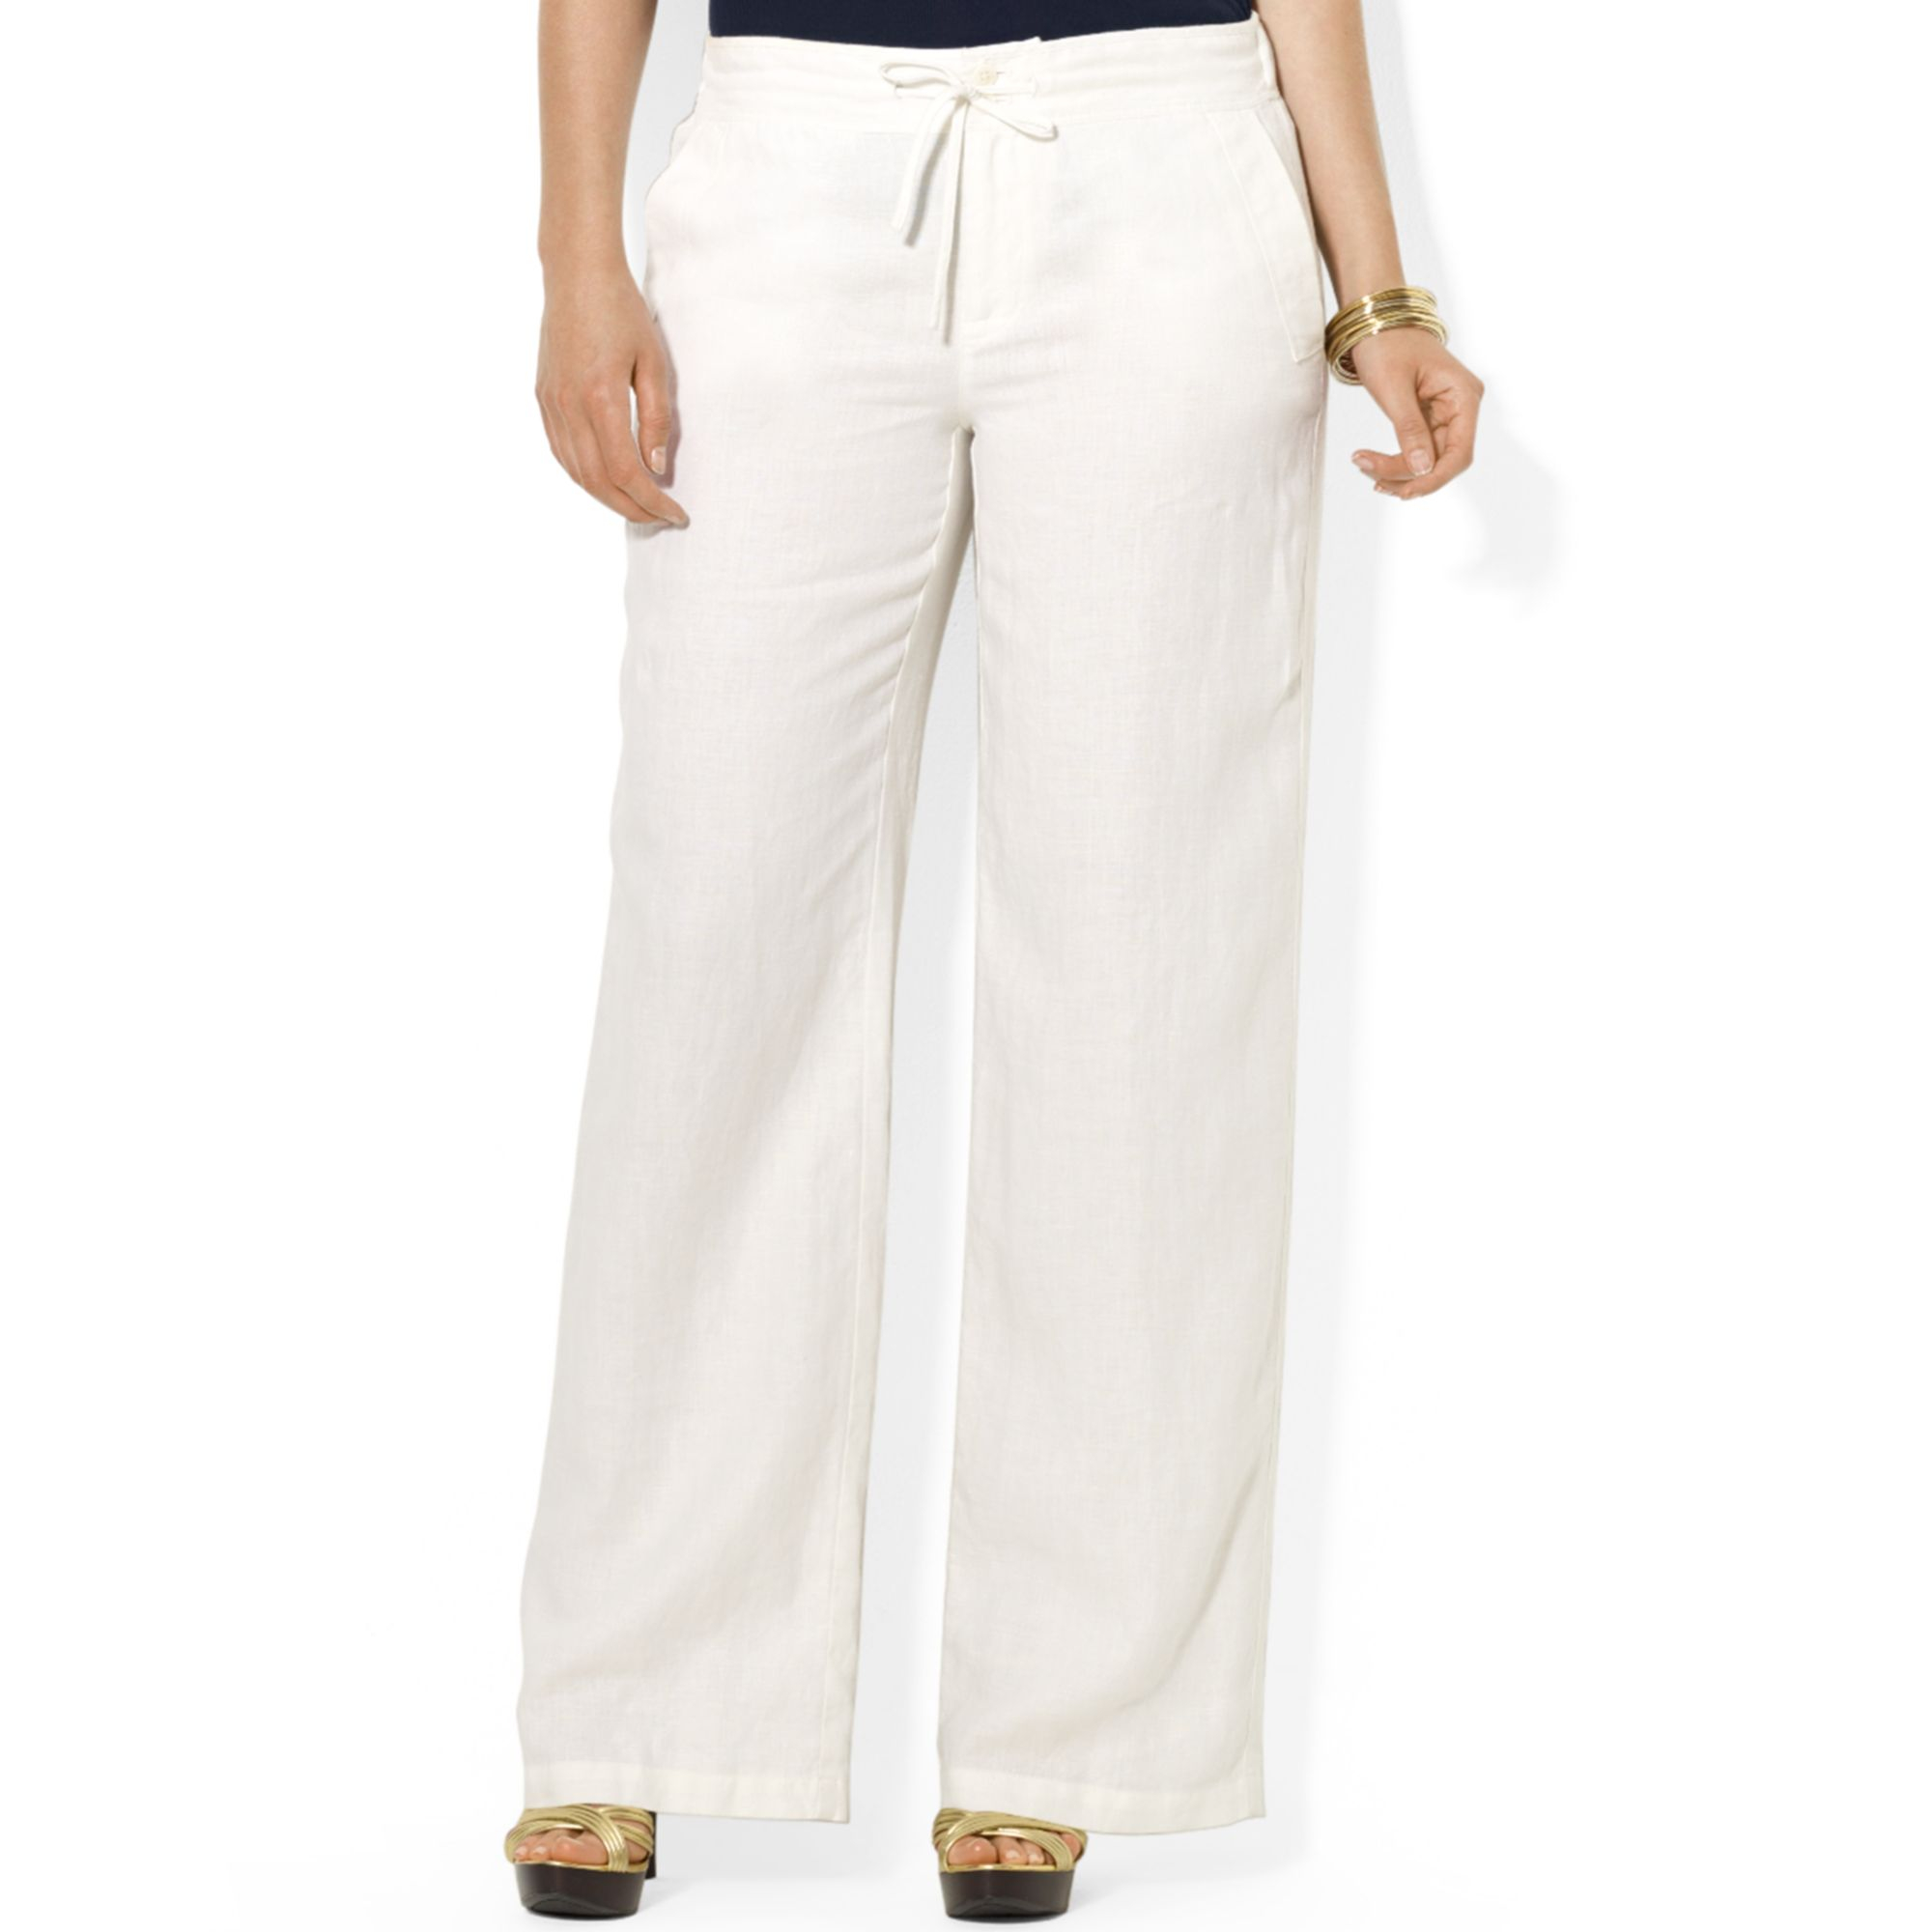 Lauren by ralph lauren Plus Size Wideleg Linen Pants in White | Lyst